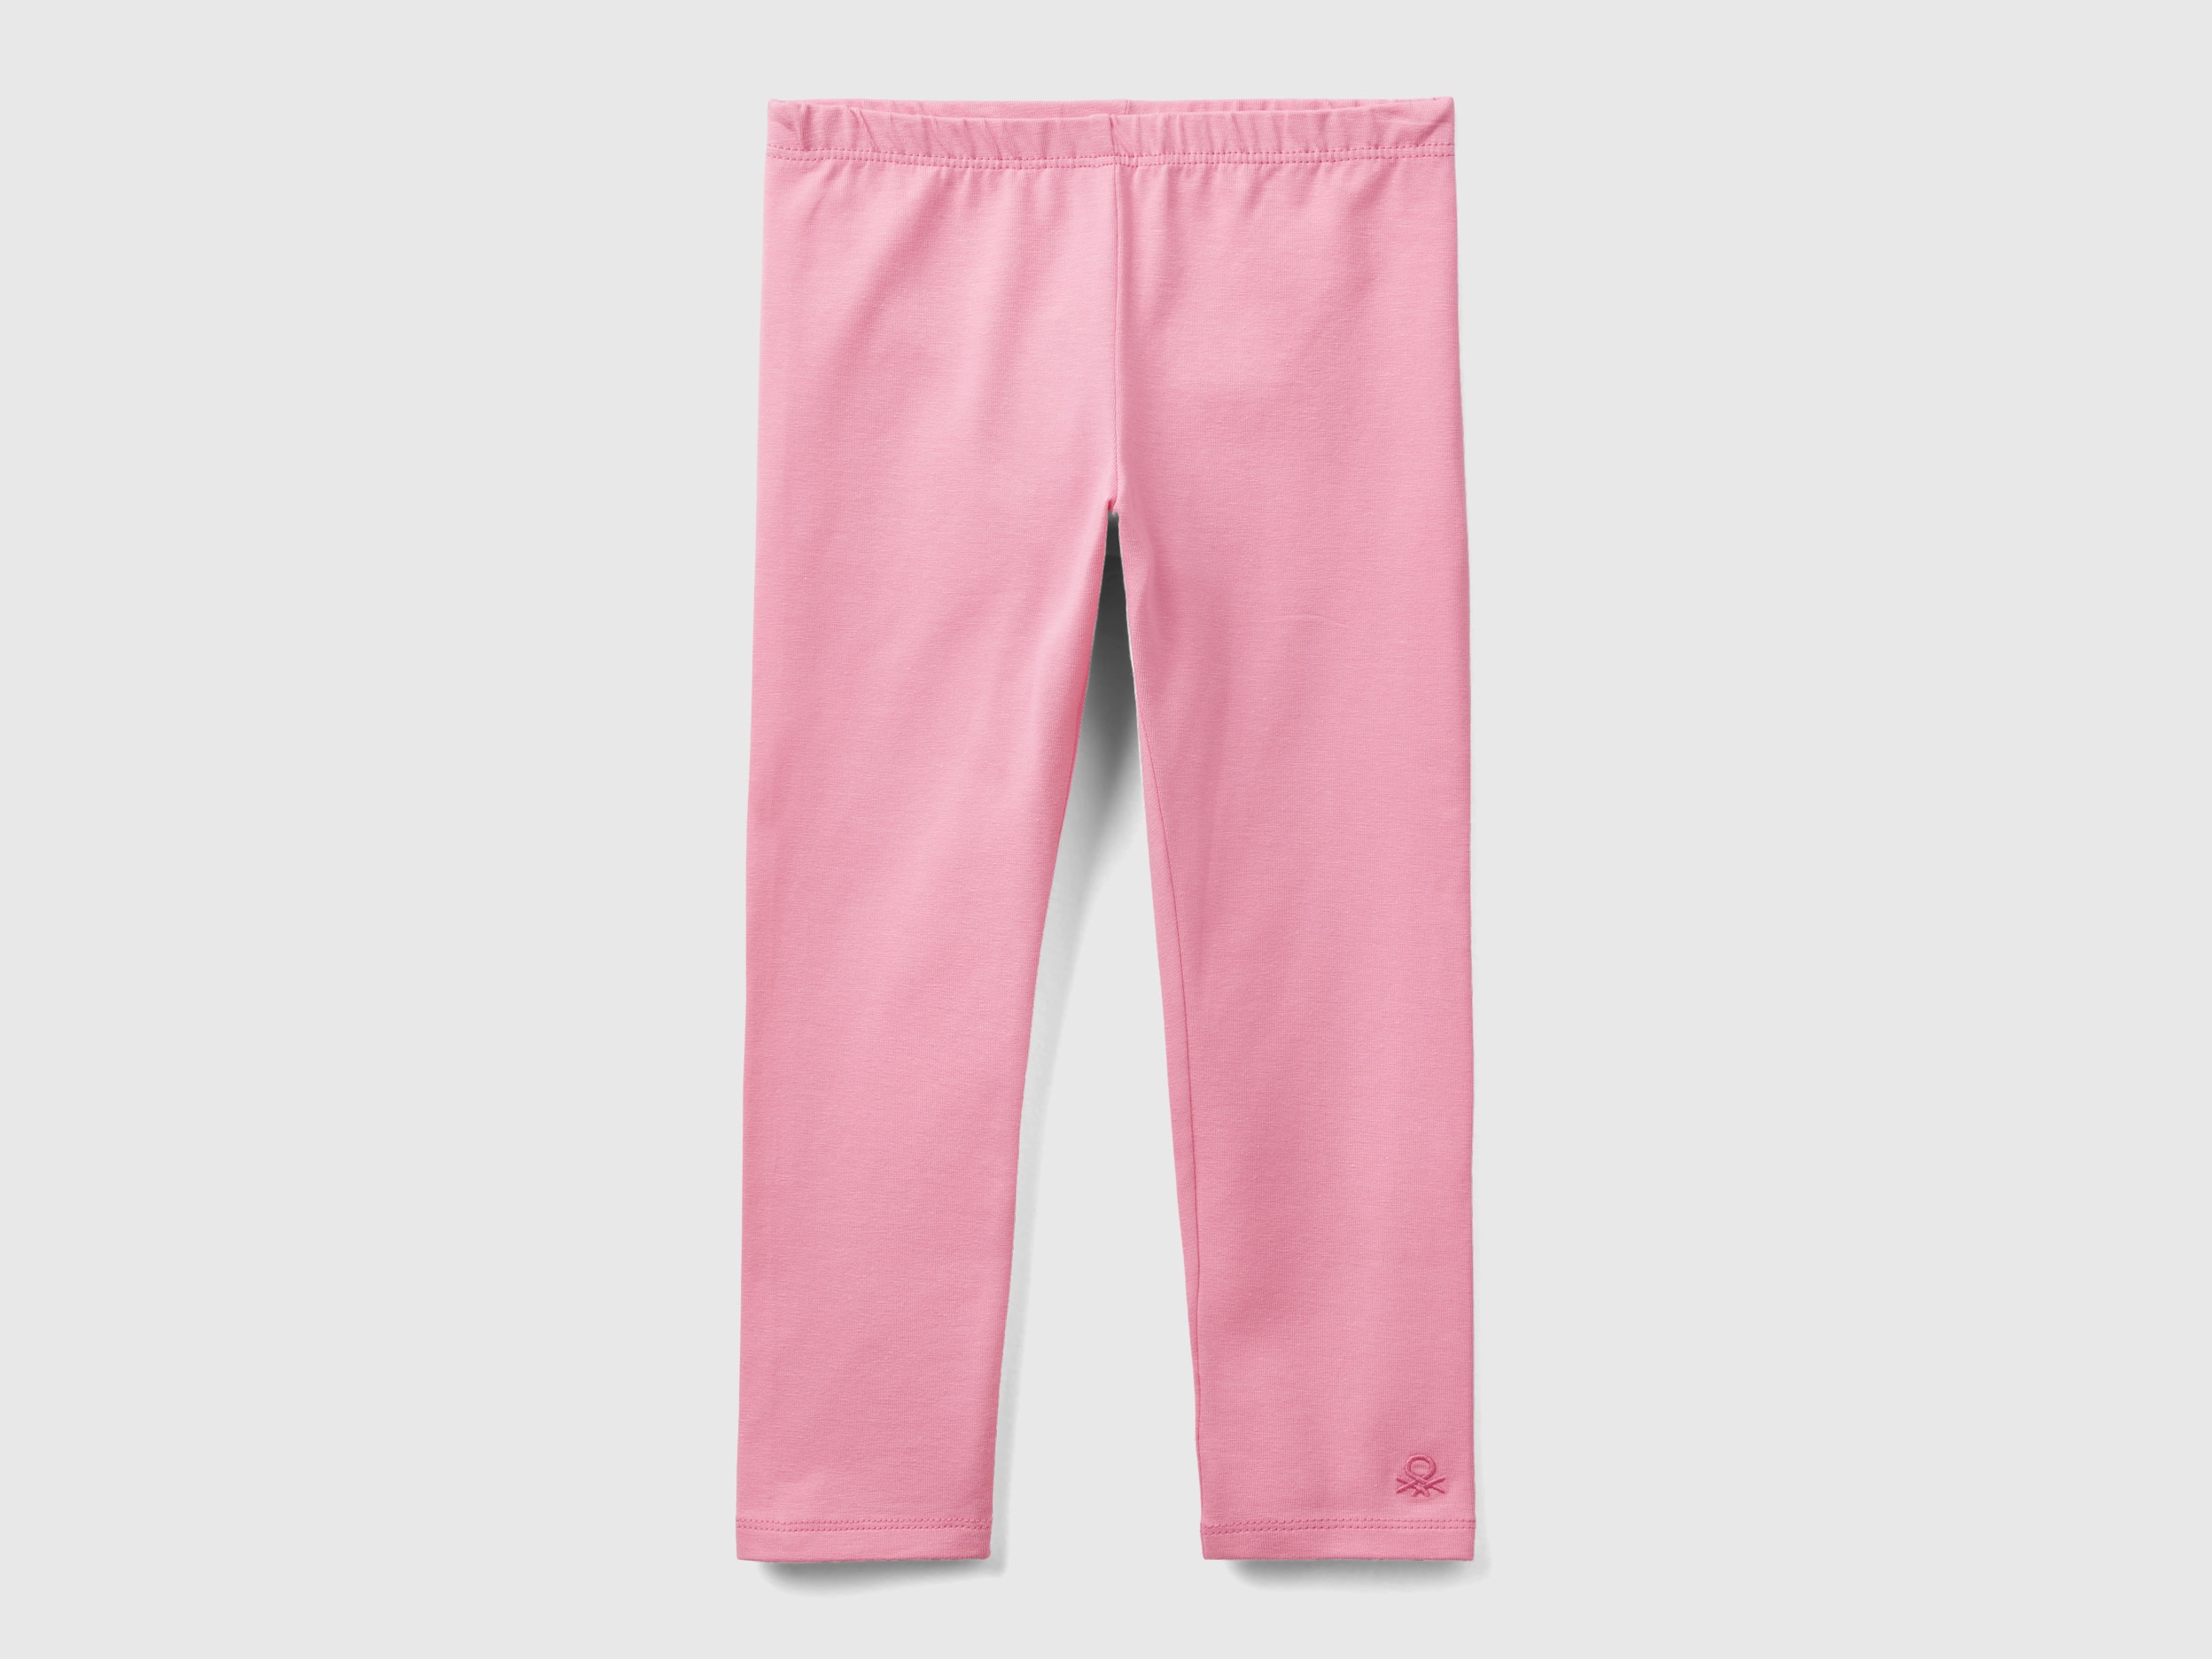 Benetton, Stretch Cotton Leggings, size 12-18, Pink, Kids